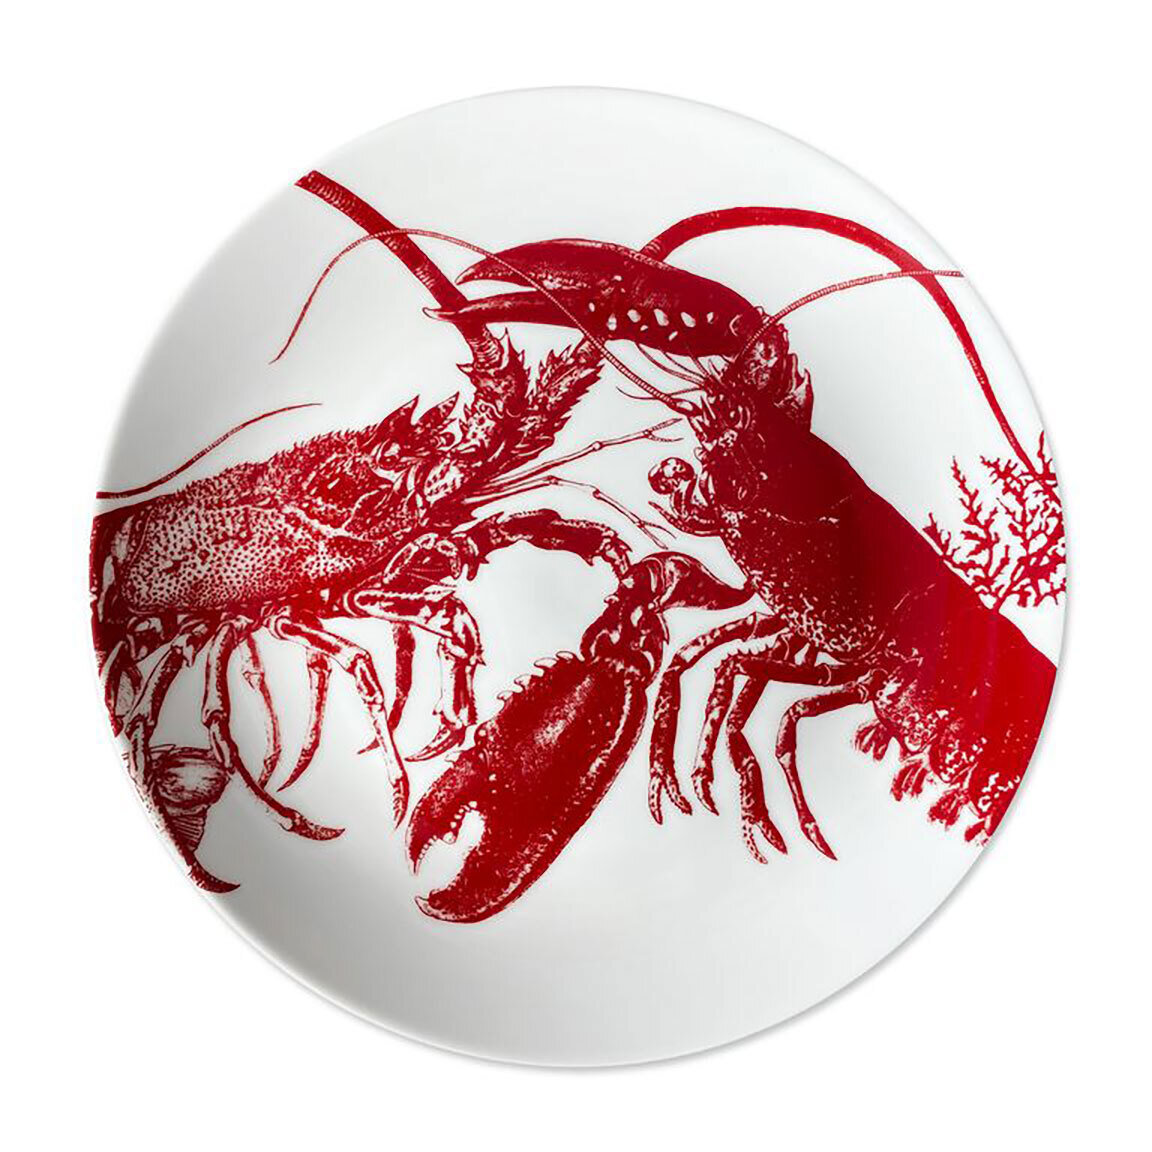 Caskata Lobster Coupe Dinner Plate Plate Red DINA-820